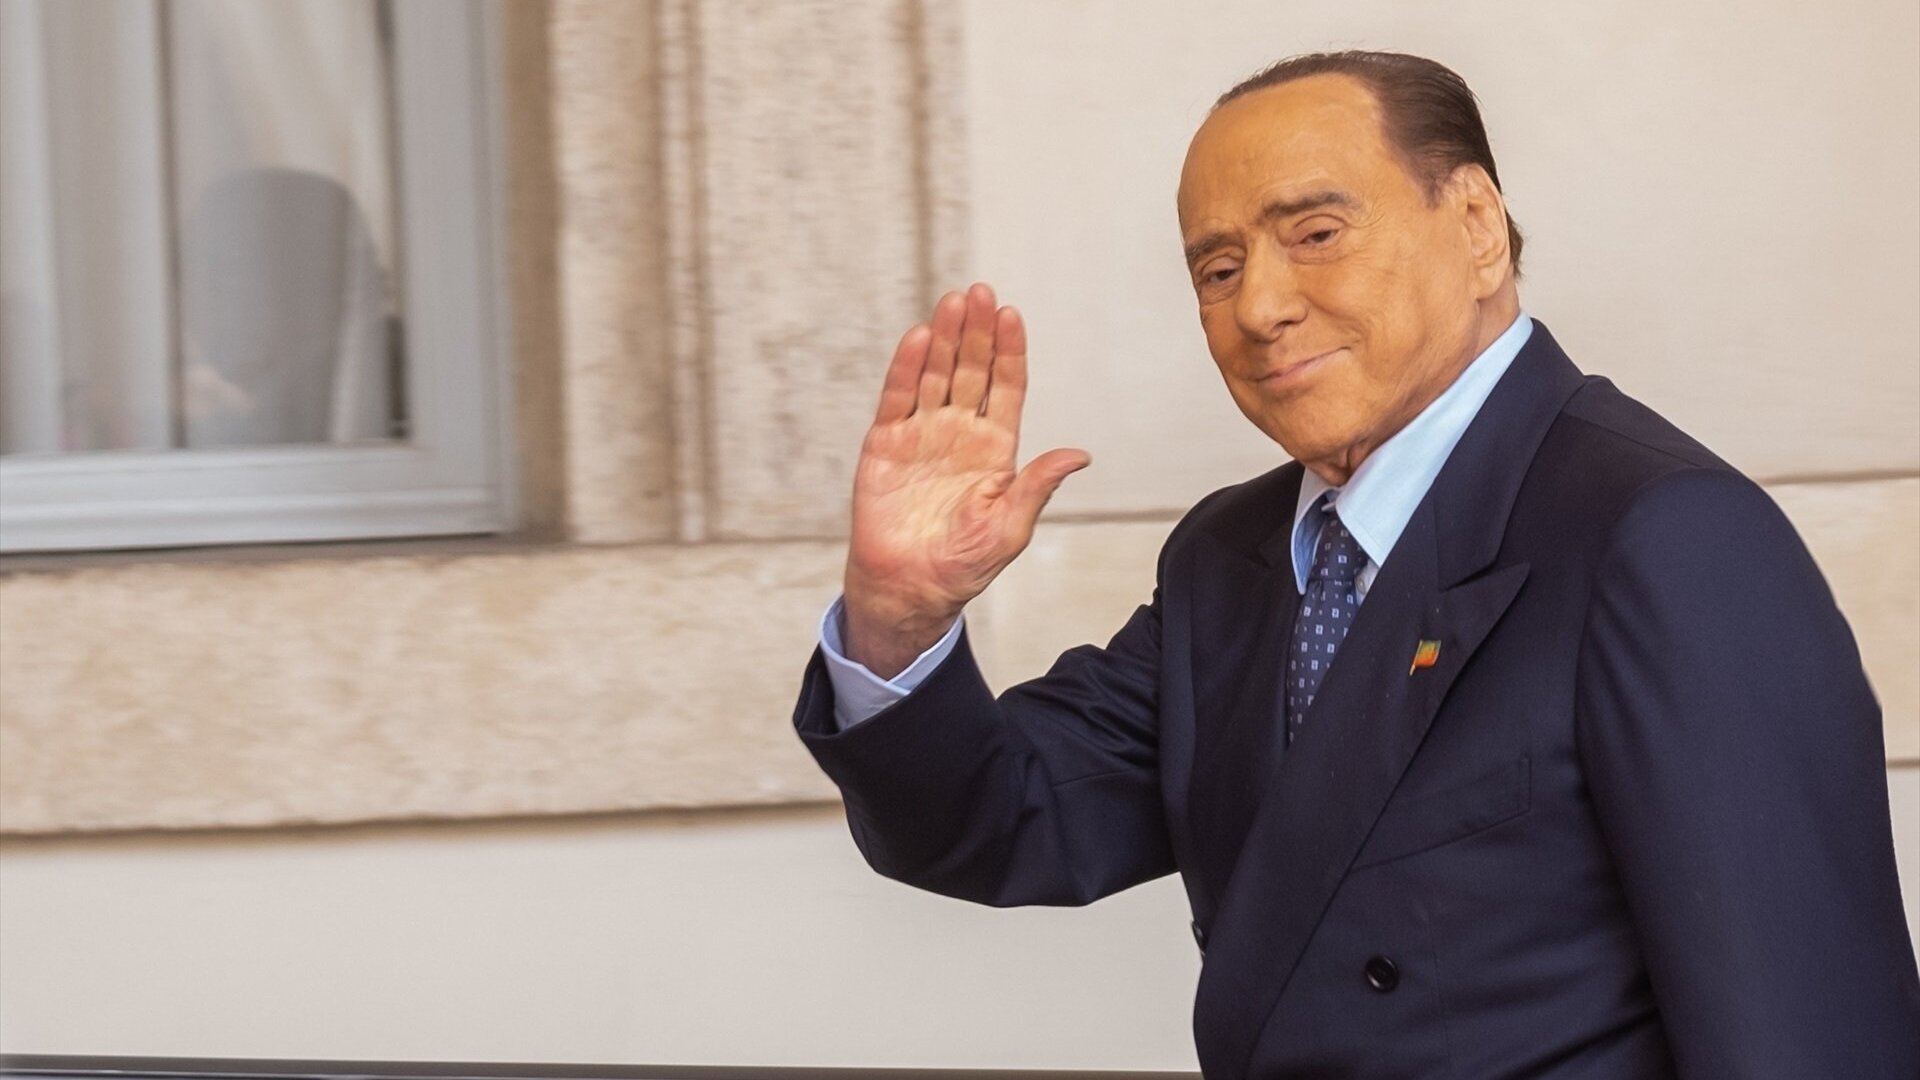 Muere Silvio Berlusconi, ex primer ministro y magnate italiano, a los 86 años